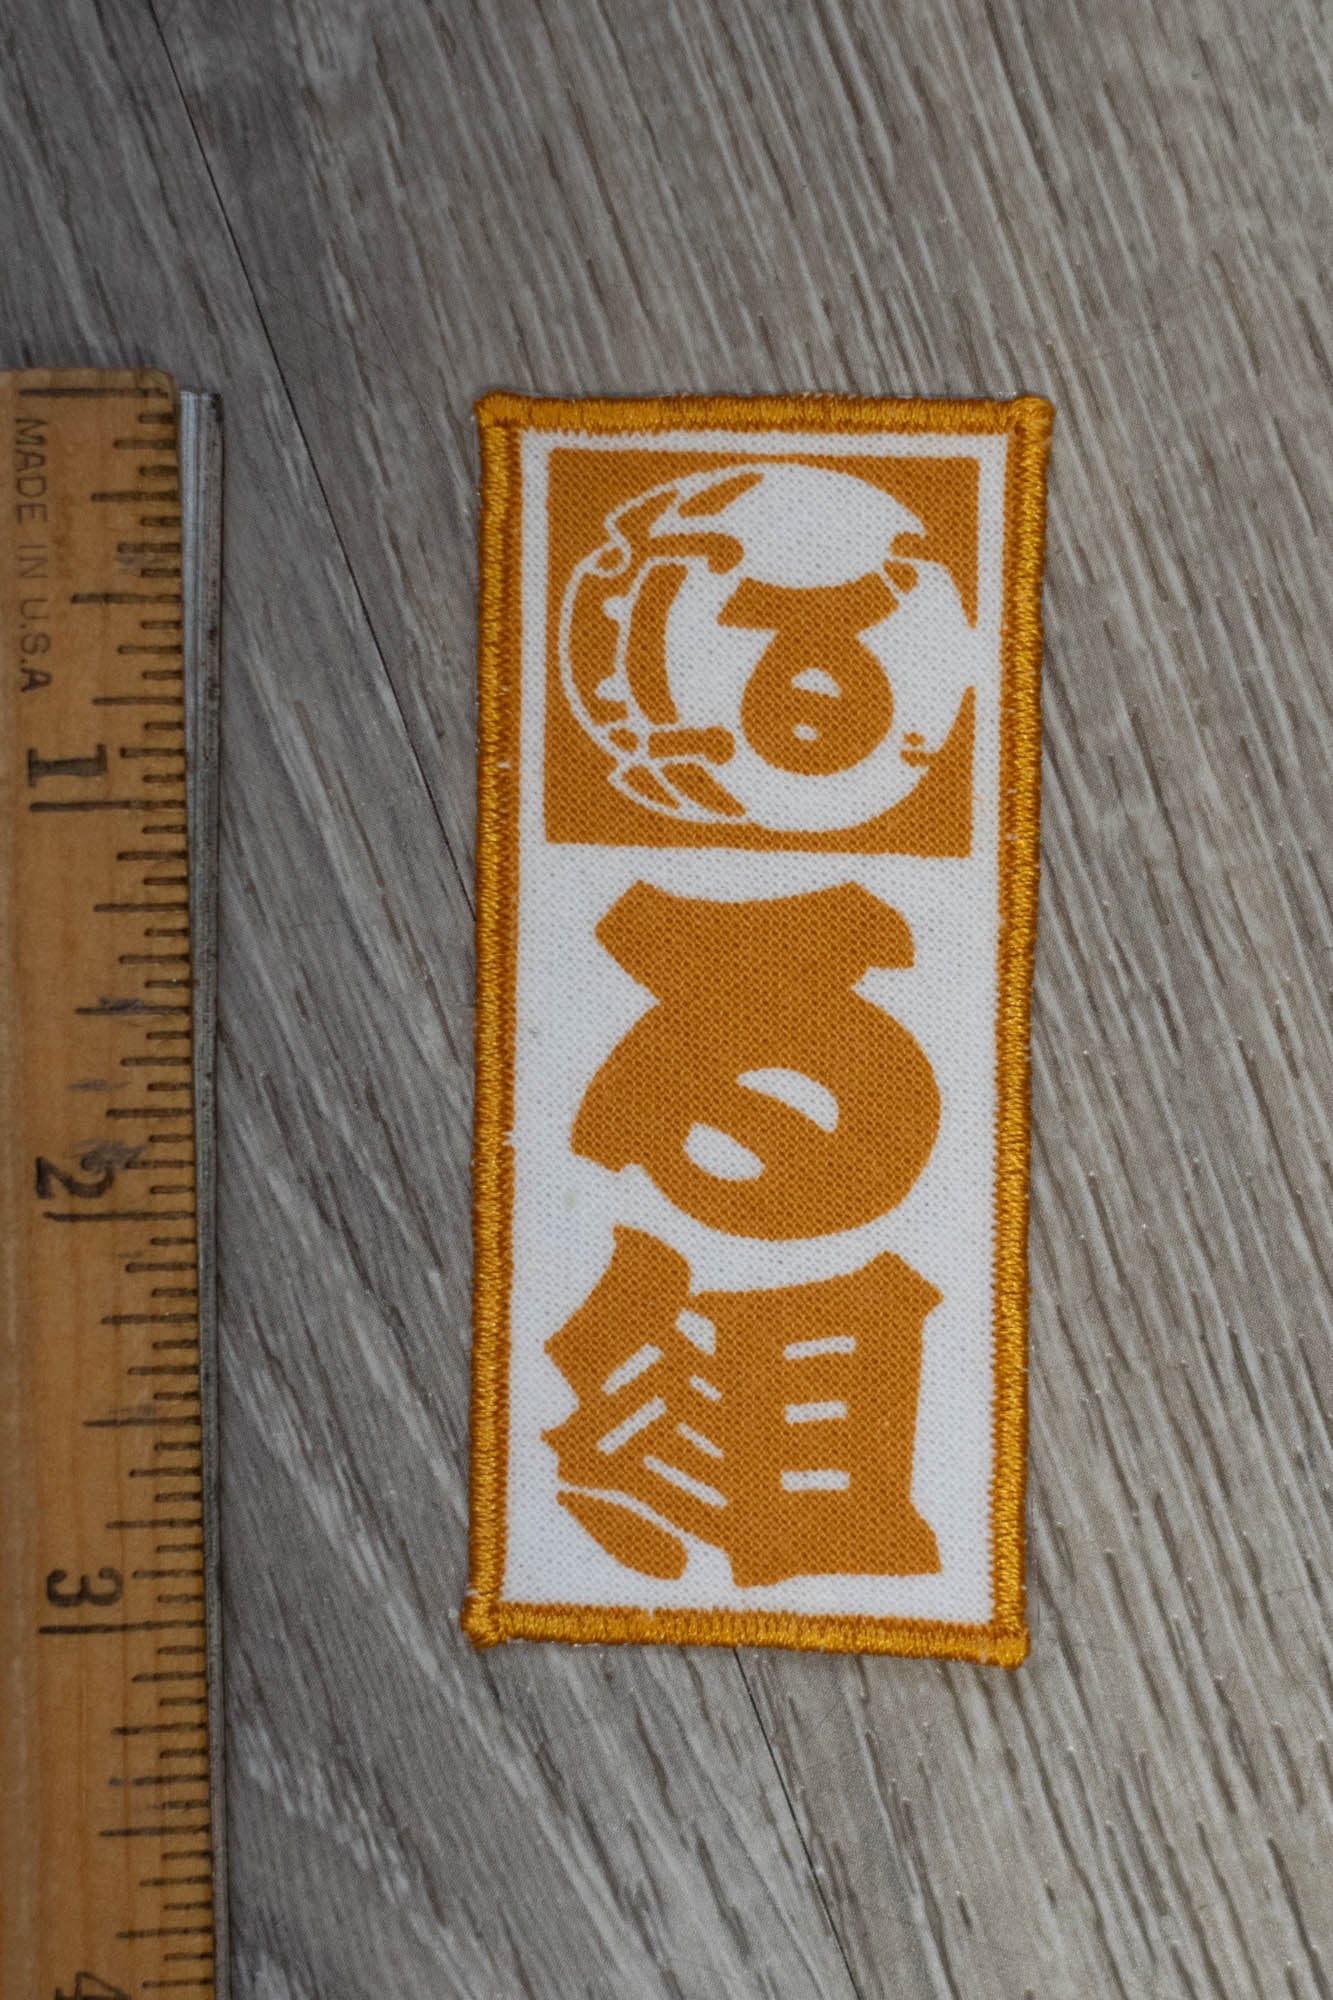 Japanese Edo Period Firefighter Company Patch/Appliqué